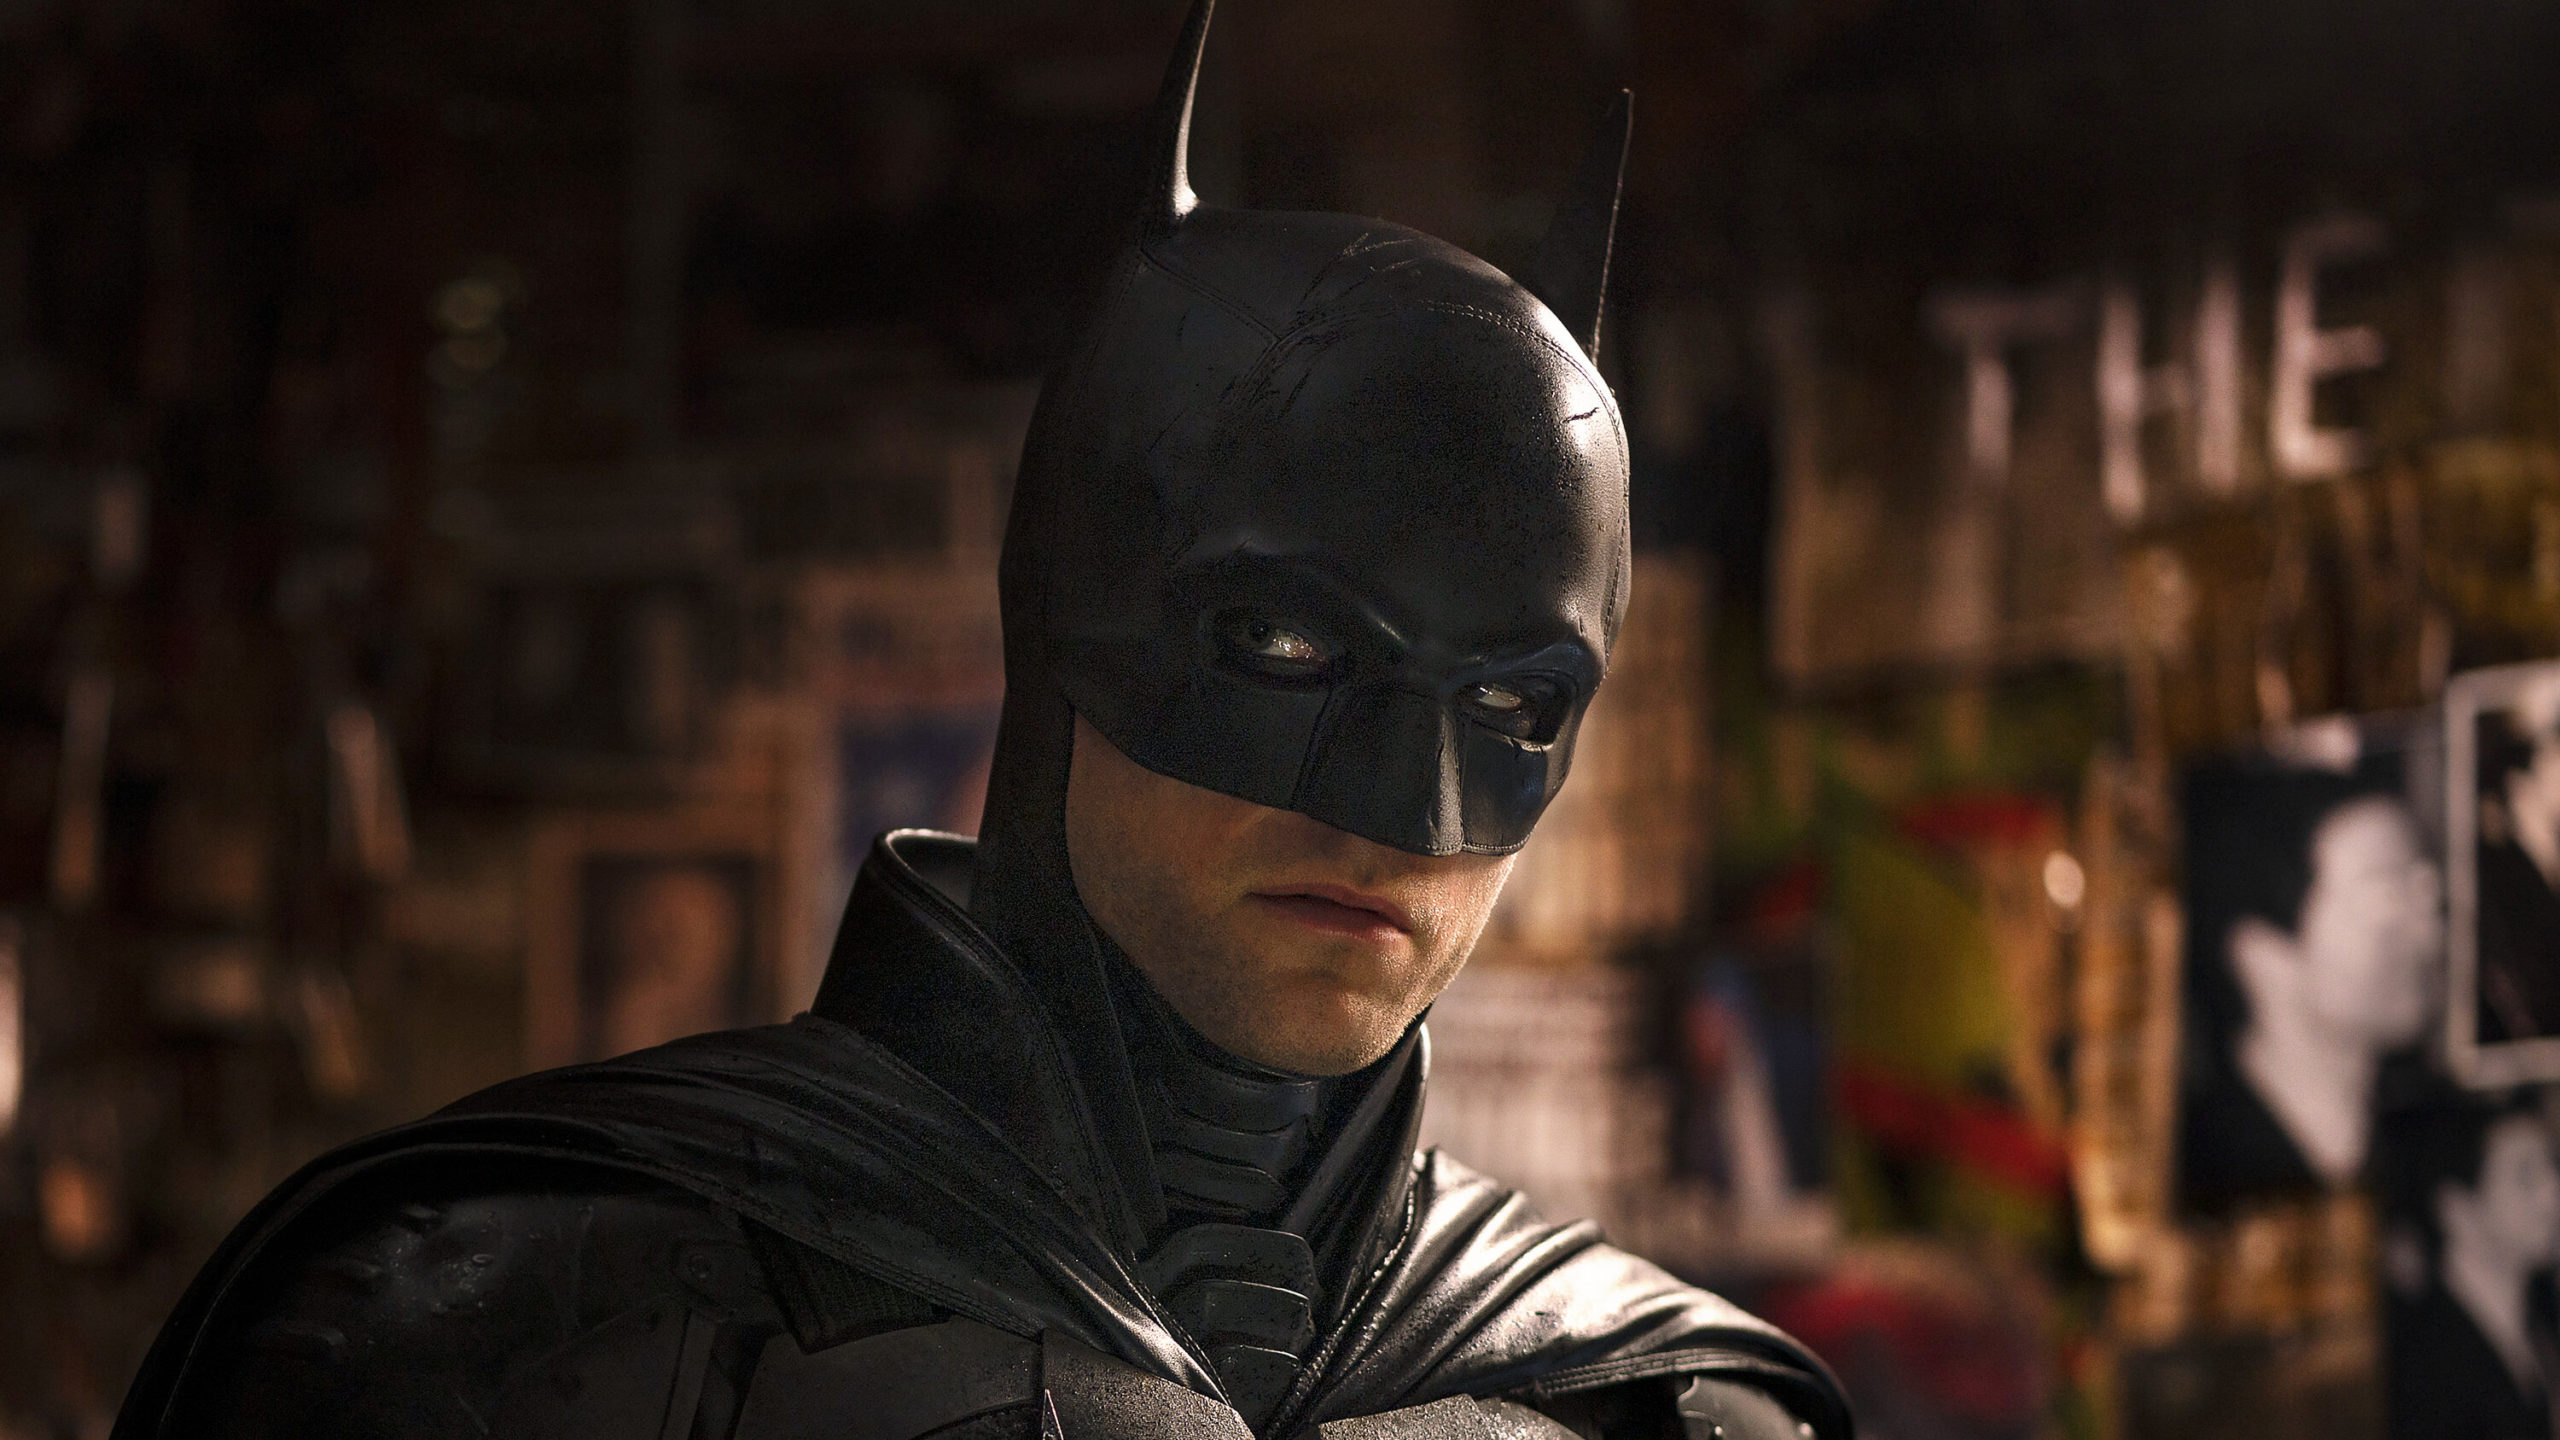 Director Matt Reeves confirms he's writing the script for The Batman 2